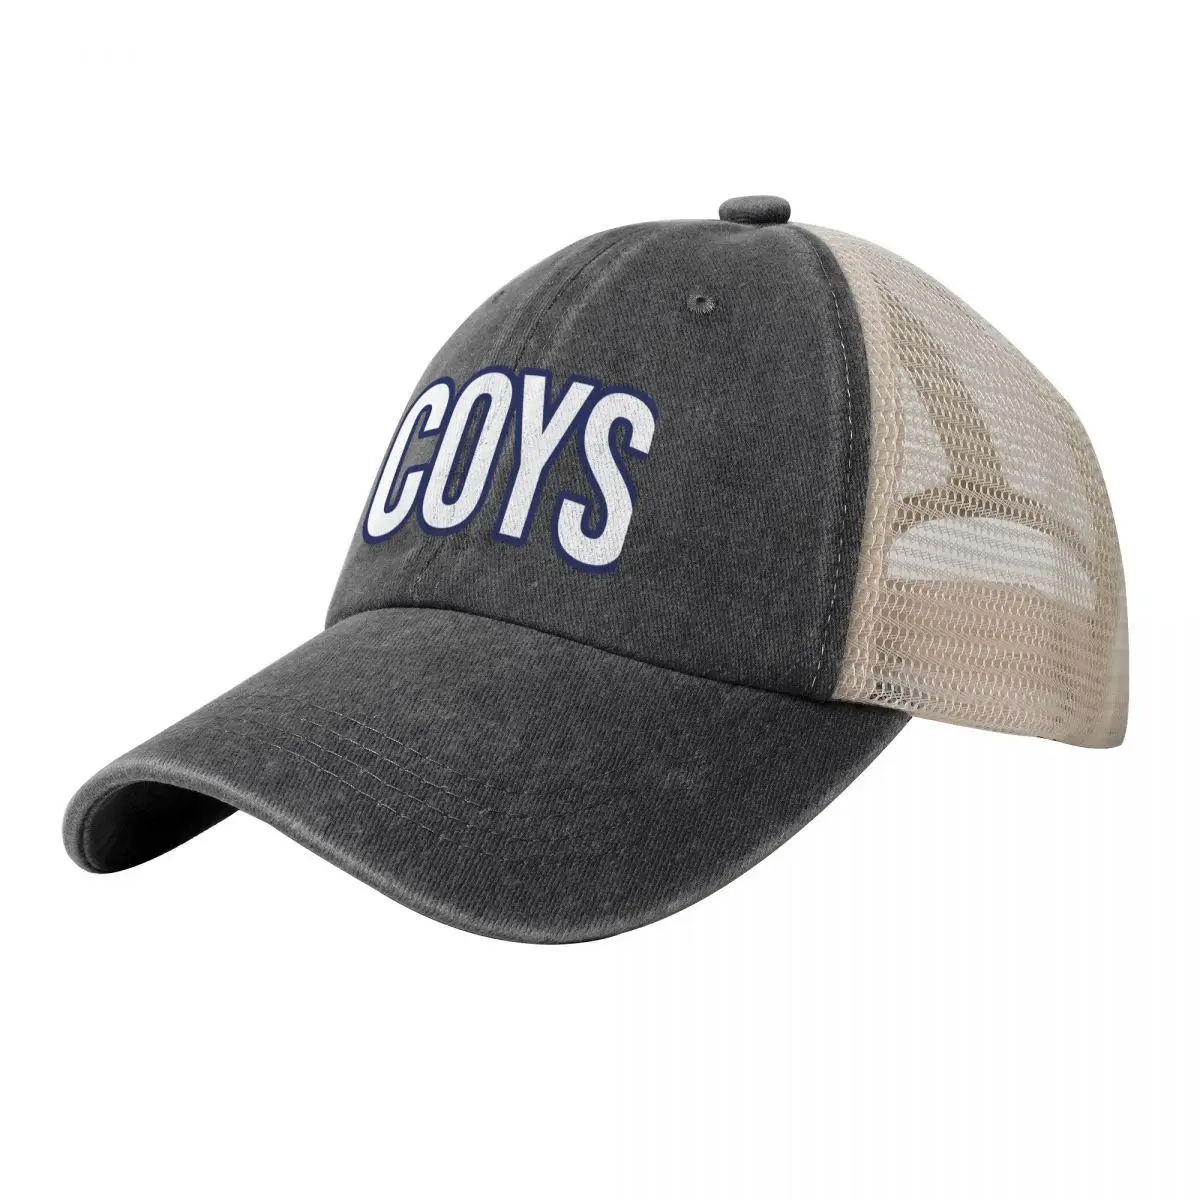 

COYScoysCOYS Cowboy Mesh Baseball Cap Thermal Visor Trucker Hat Golf Wear Men Women's